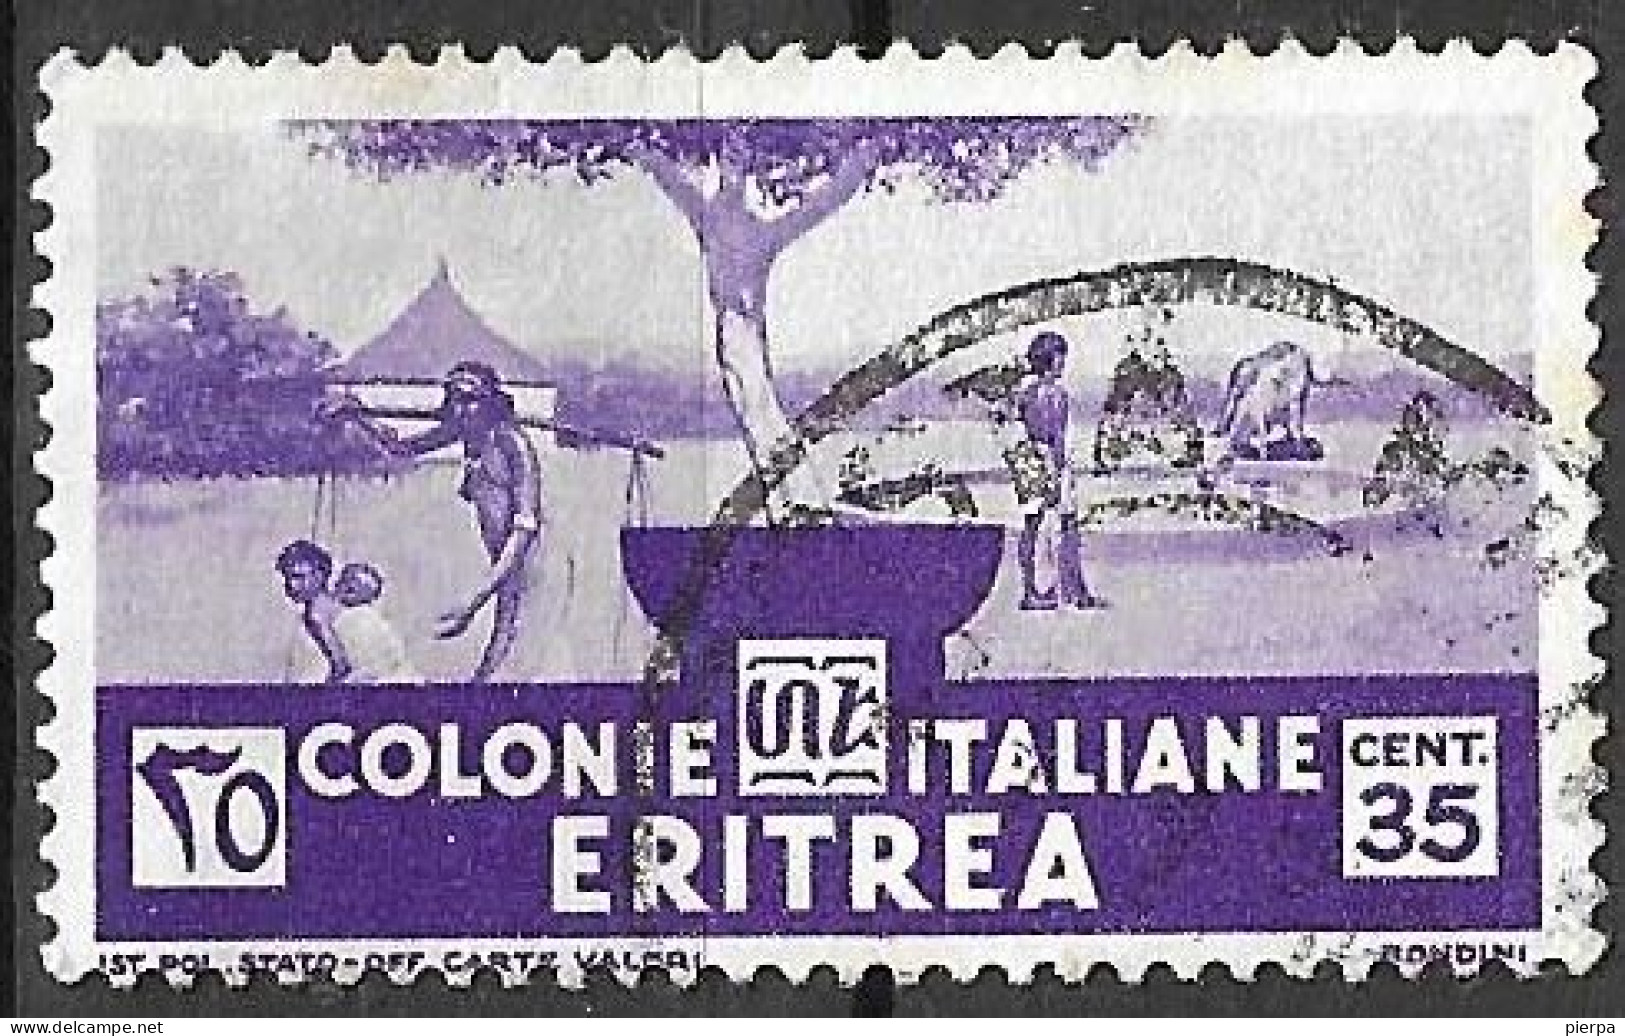 ERITREA - 1933 - INDIGENI AL POZZO - C.35 - USATO  (YVERT 200 - MICHEL 209 - SS 208) - Erythrée